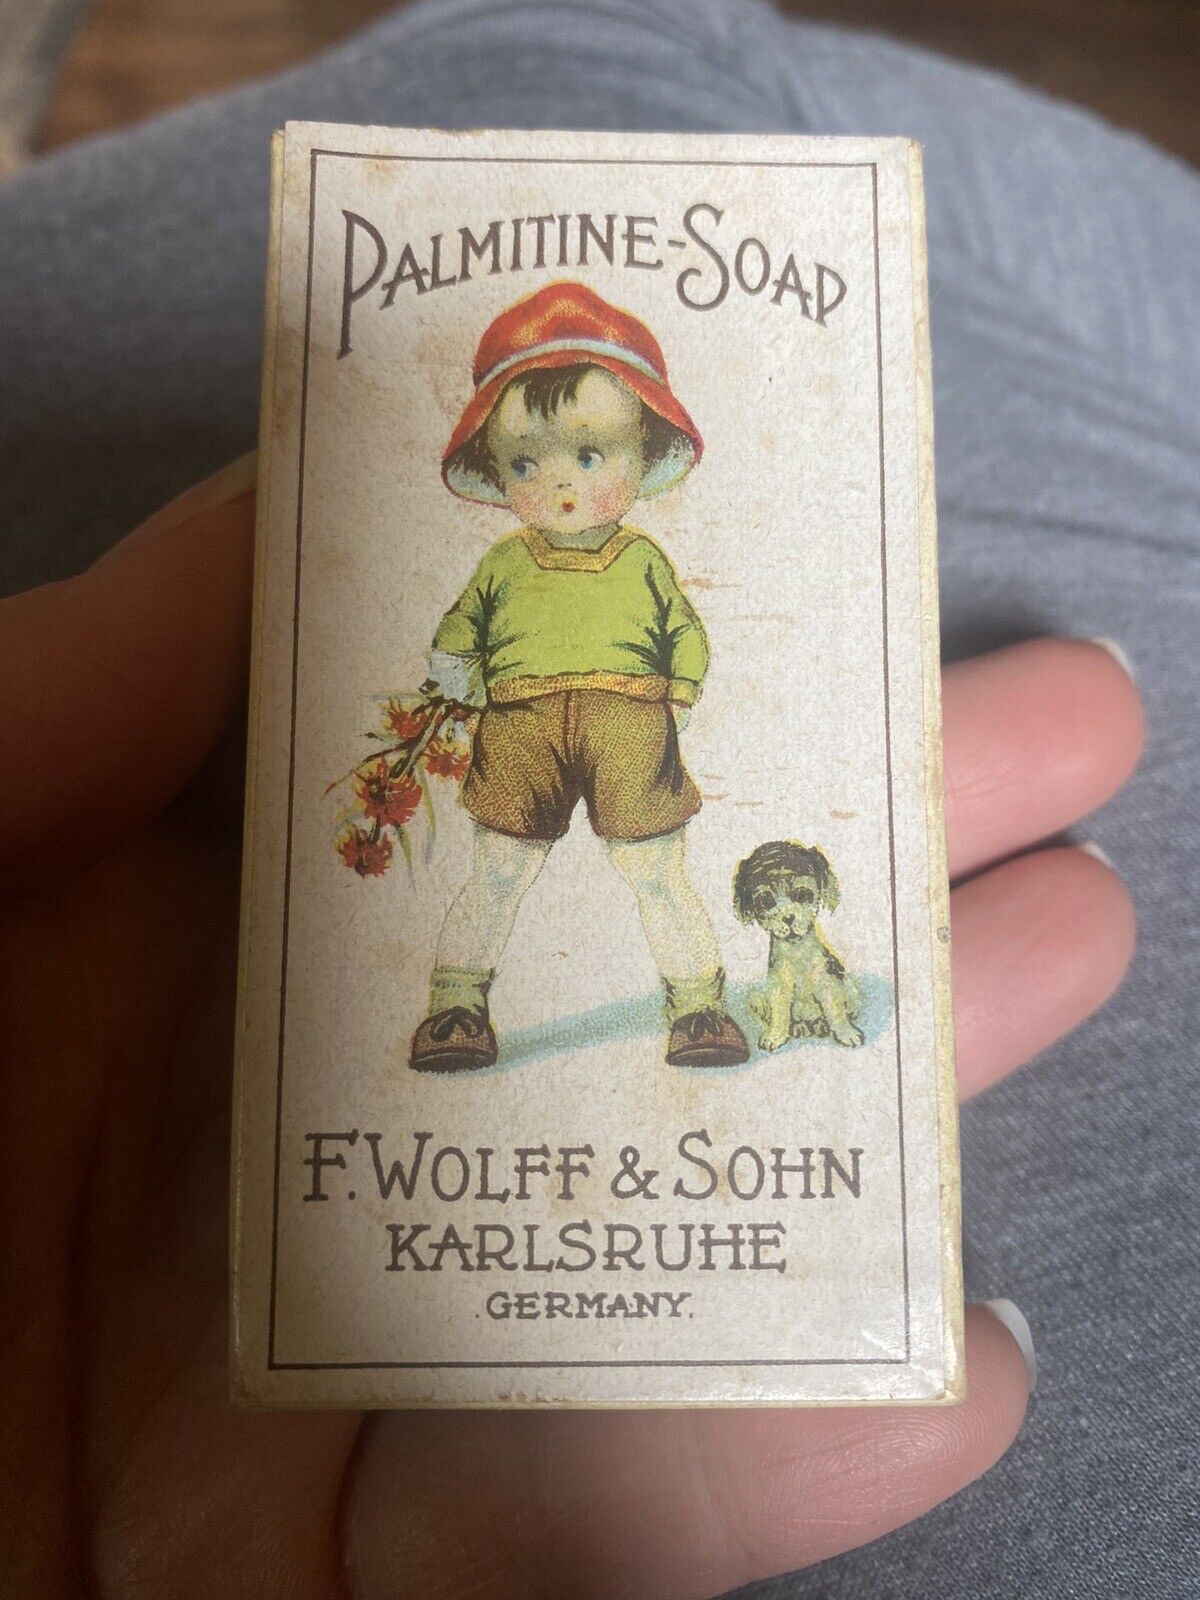 Antique Palmitine Soap F. Wolff & Sohn Karlsruhe Germany